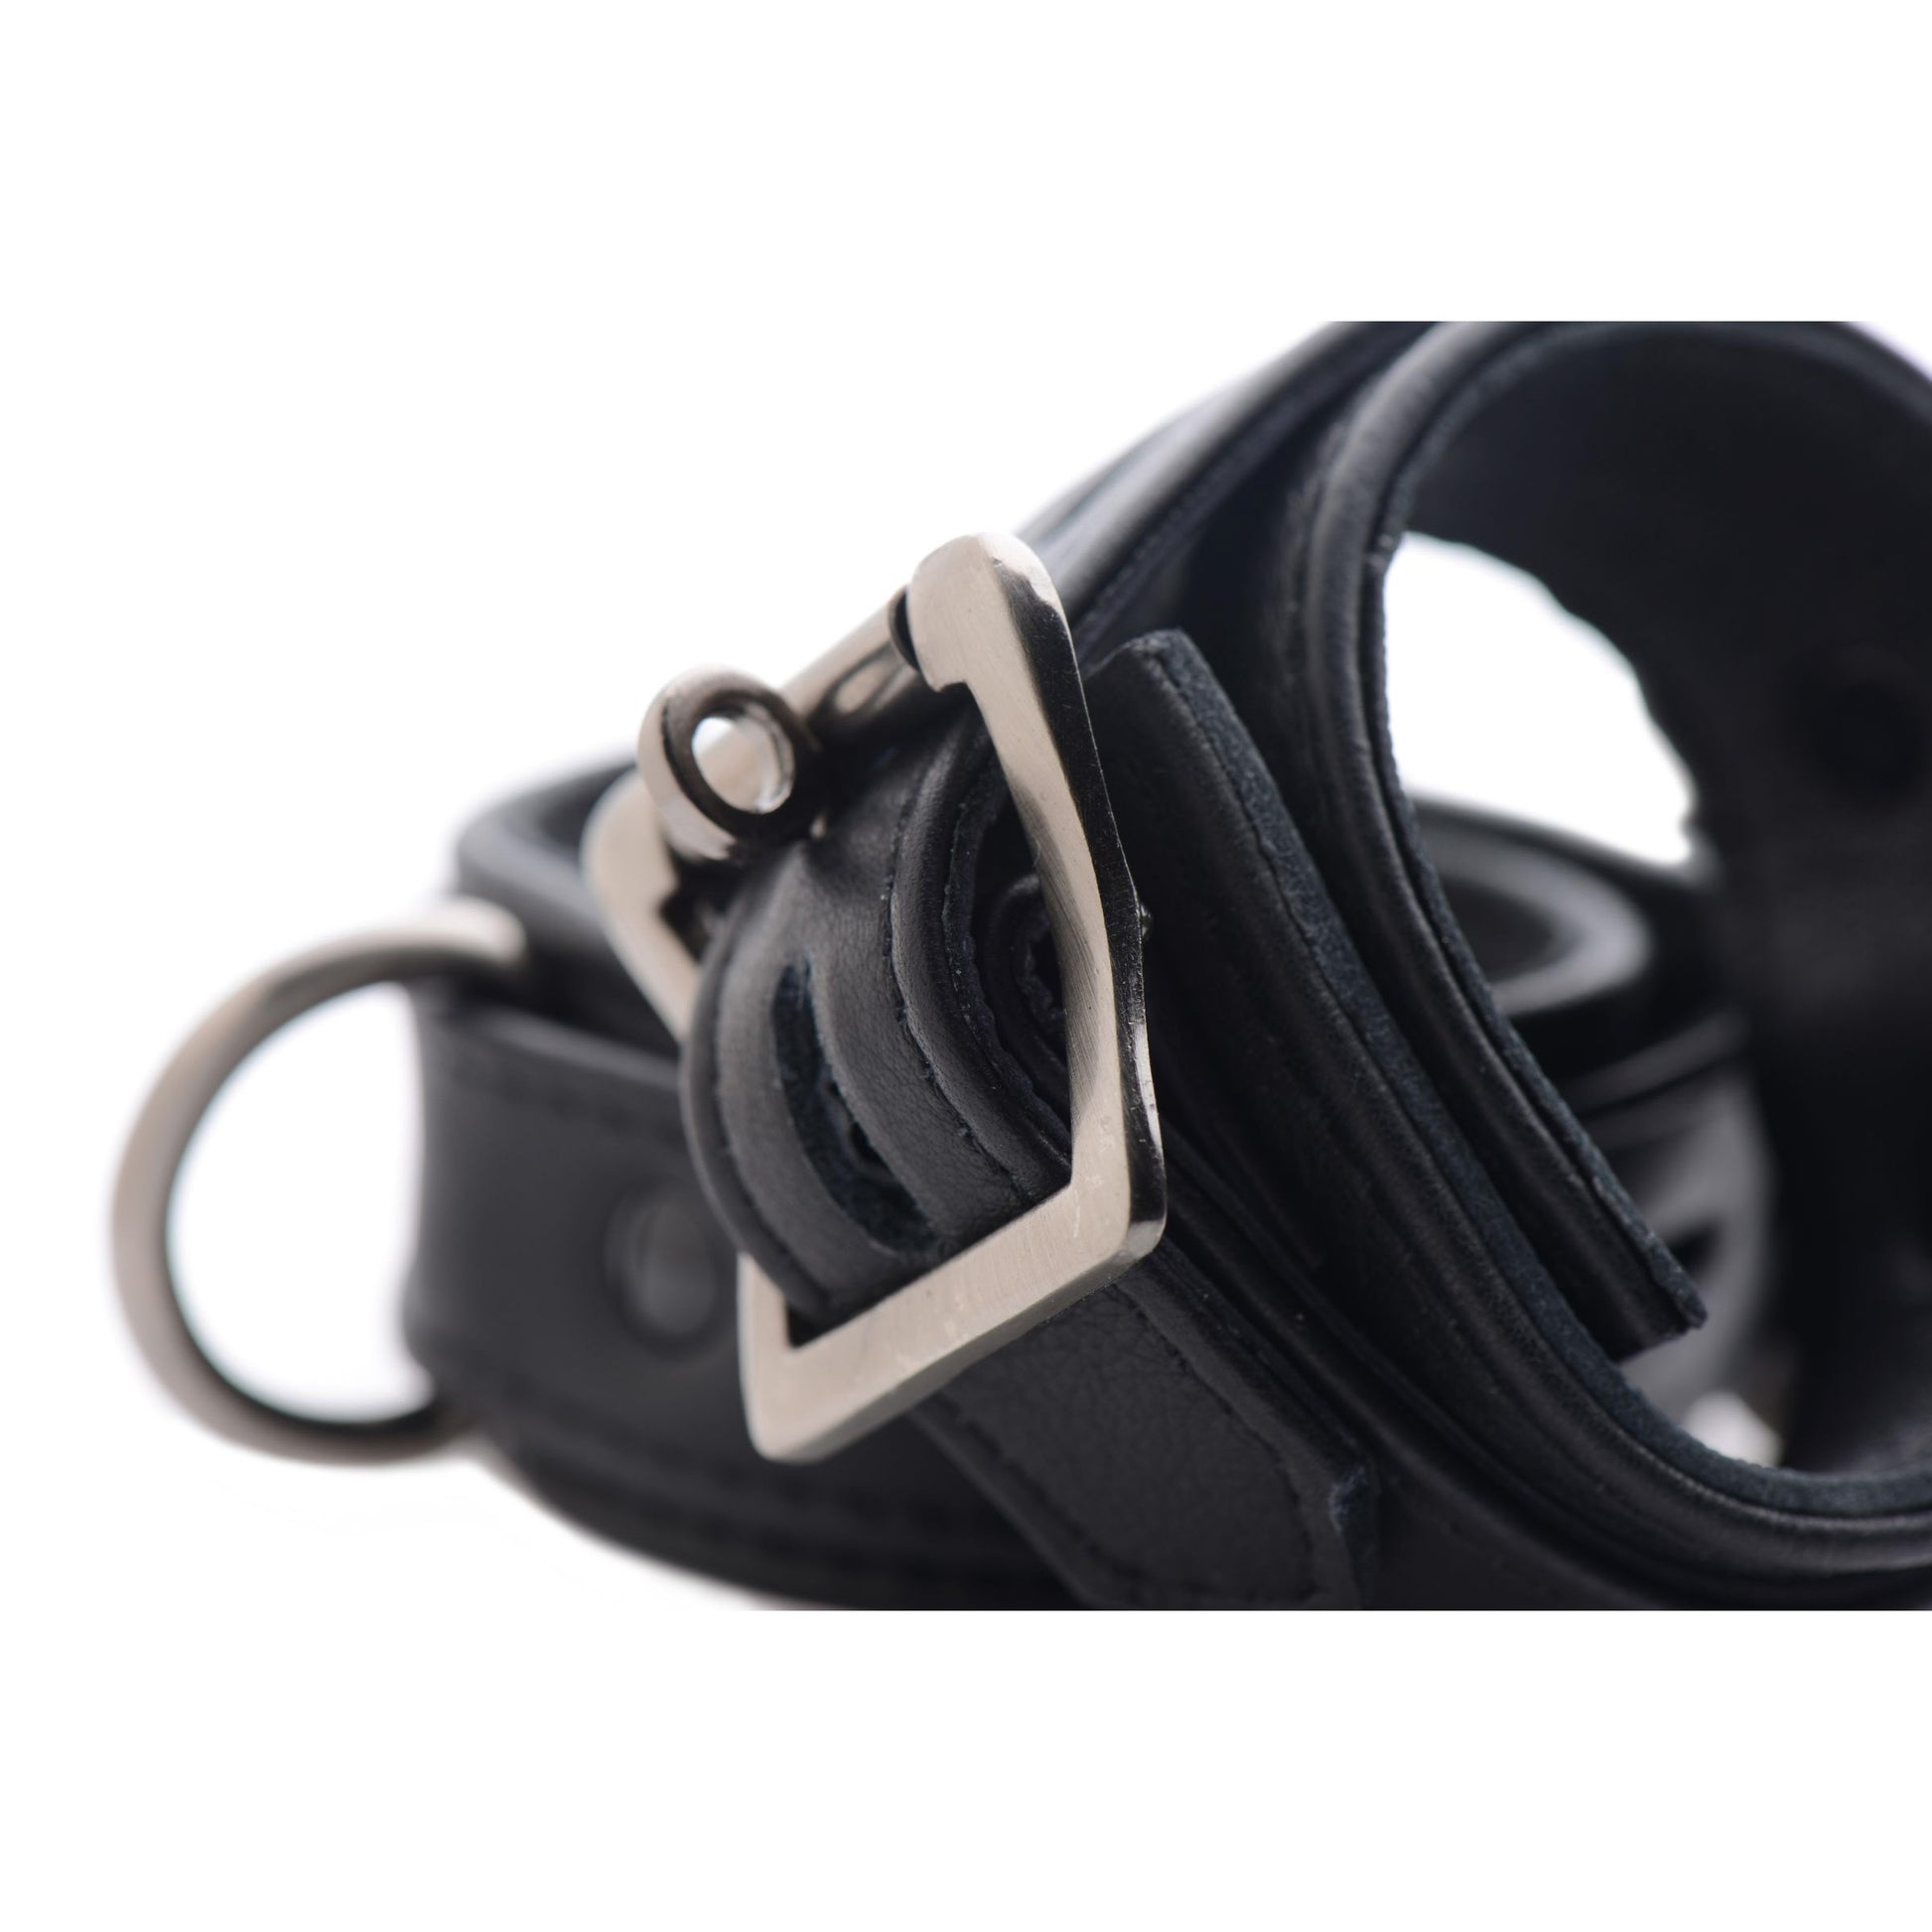 Strict Leather Luxury Locking Ankle Cuffs - UABDSM